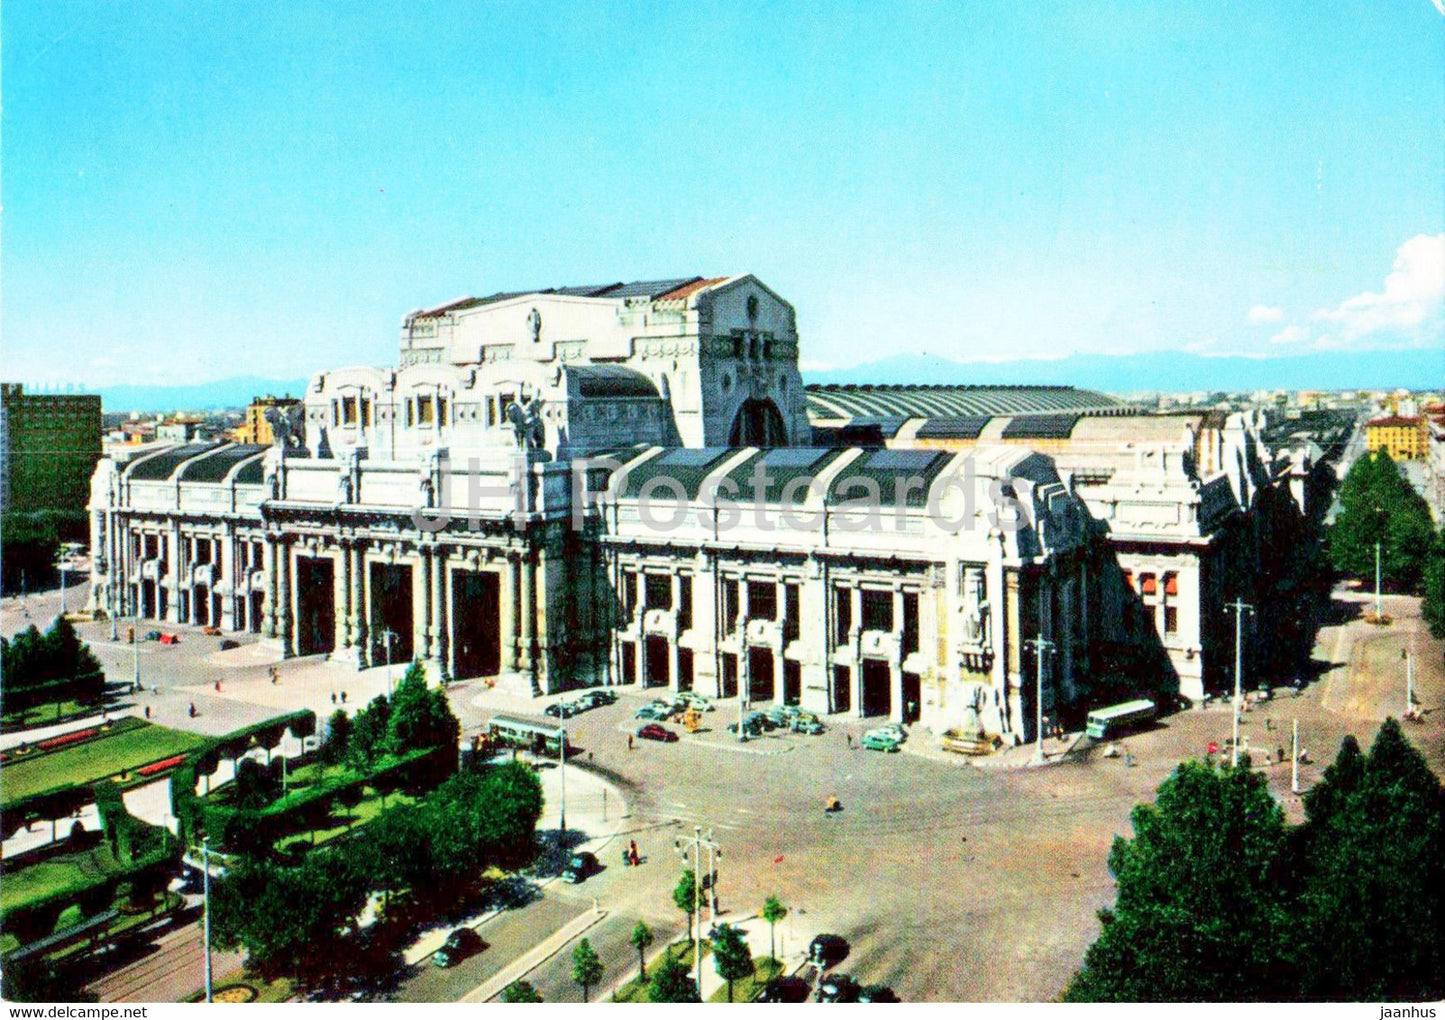 Milano - Milan - Stazione Centrale - Railway Station - Italy - unused - JH Postcards